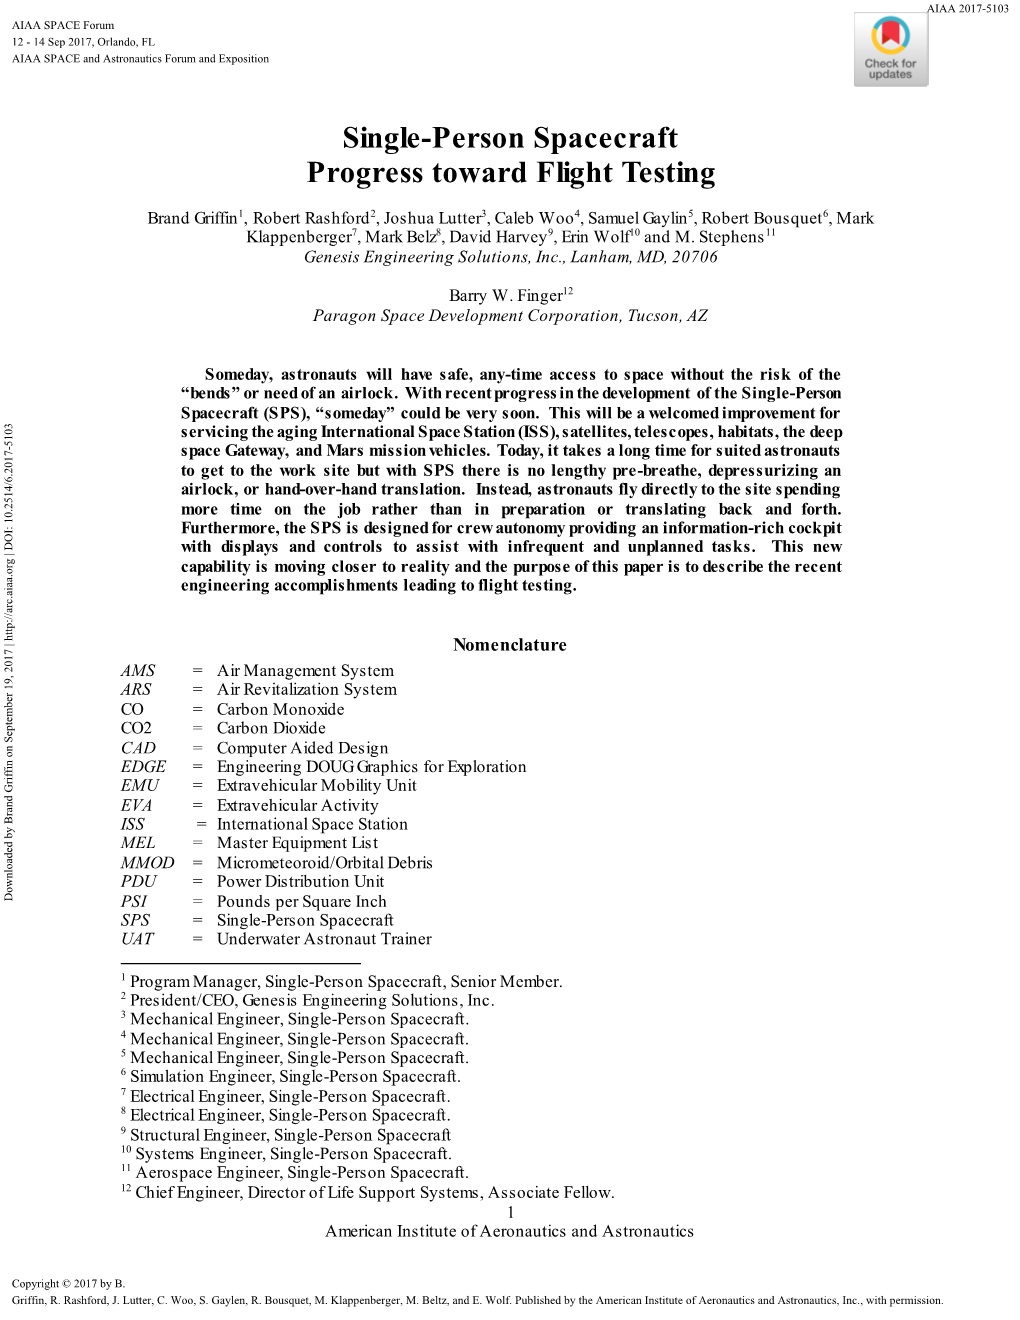 Single-Person Spacecraft: Progress Toward Flight Testing